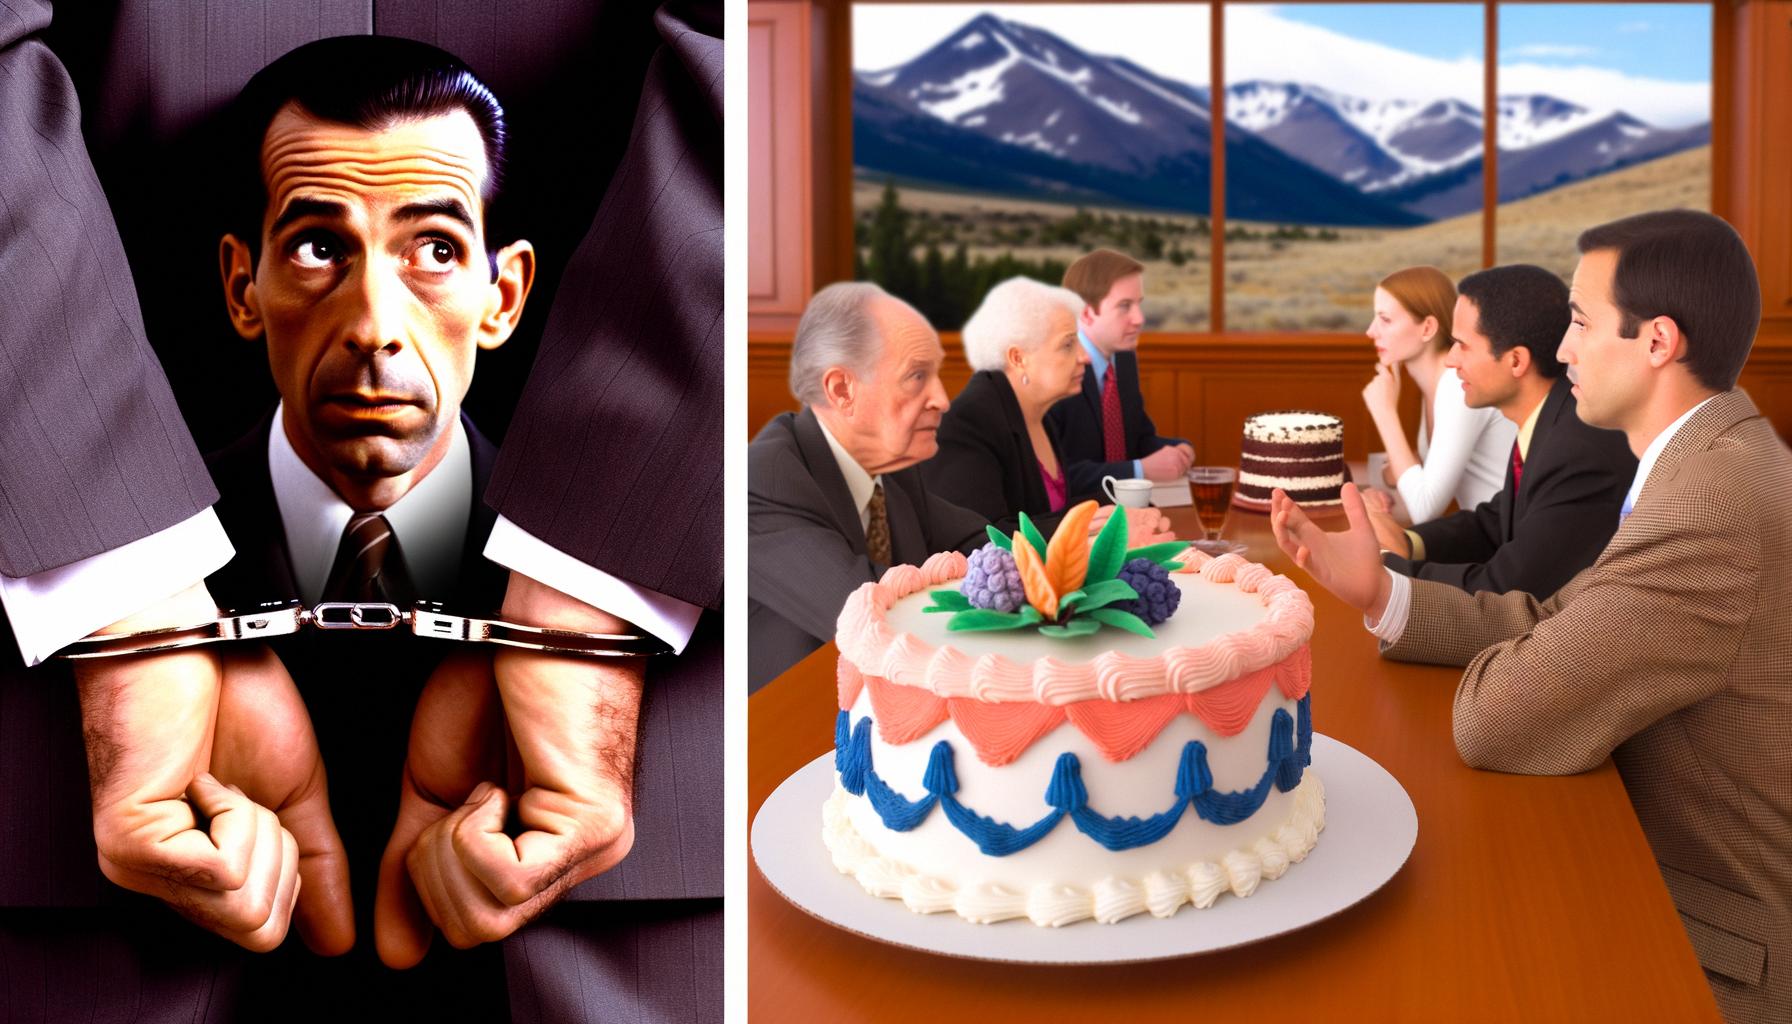 Whistleblower faces prison, Colorado cake case debated